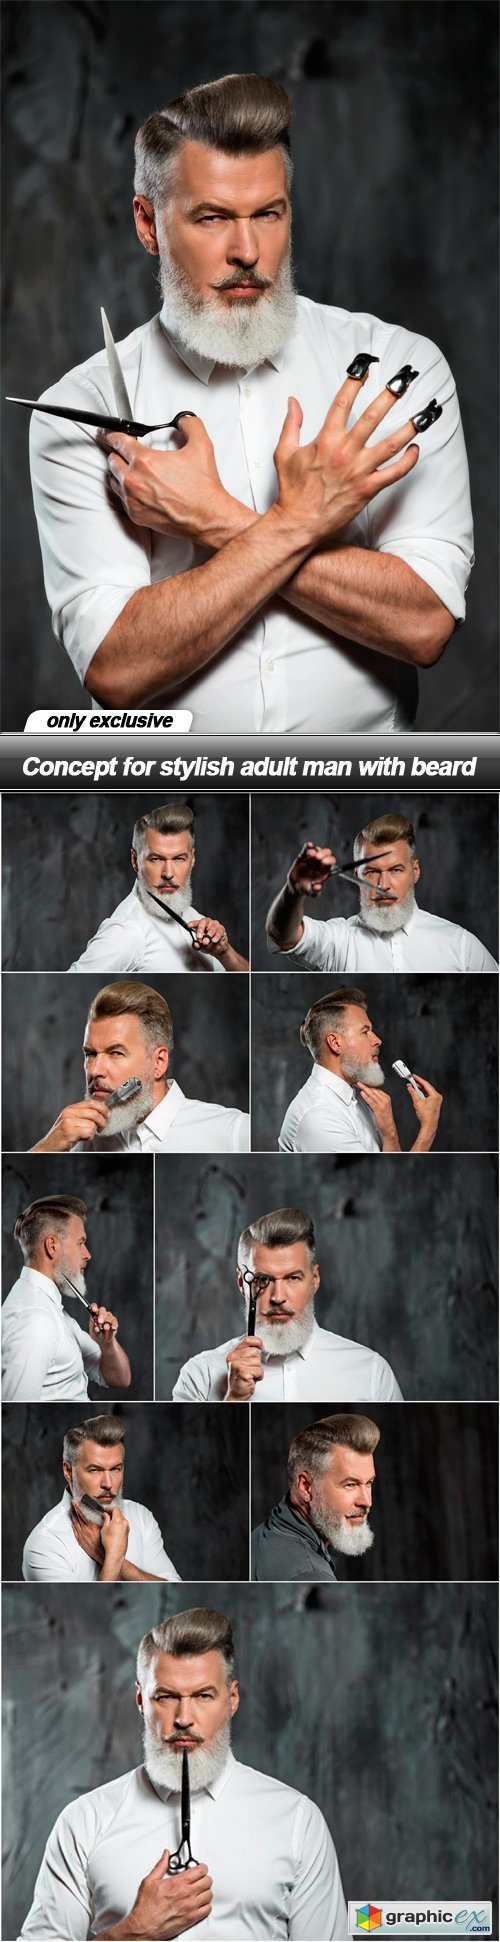 Concept for stylish adult man with beard - 10 UHQ JPEG